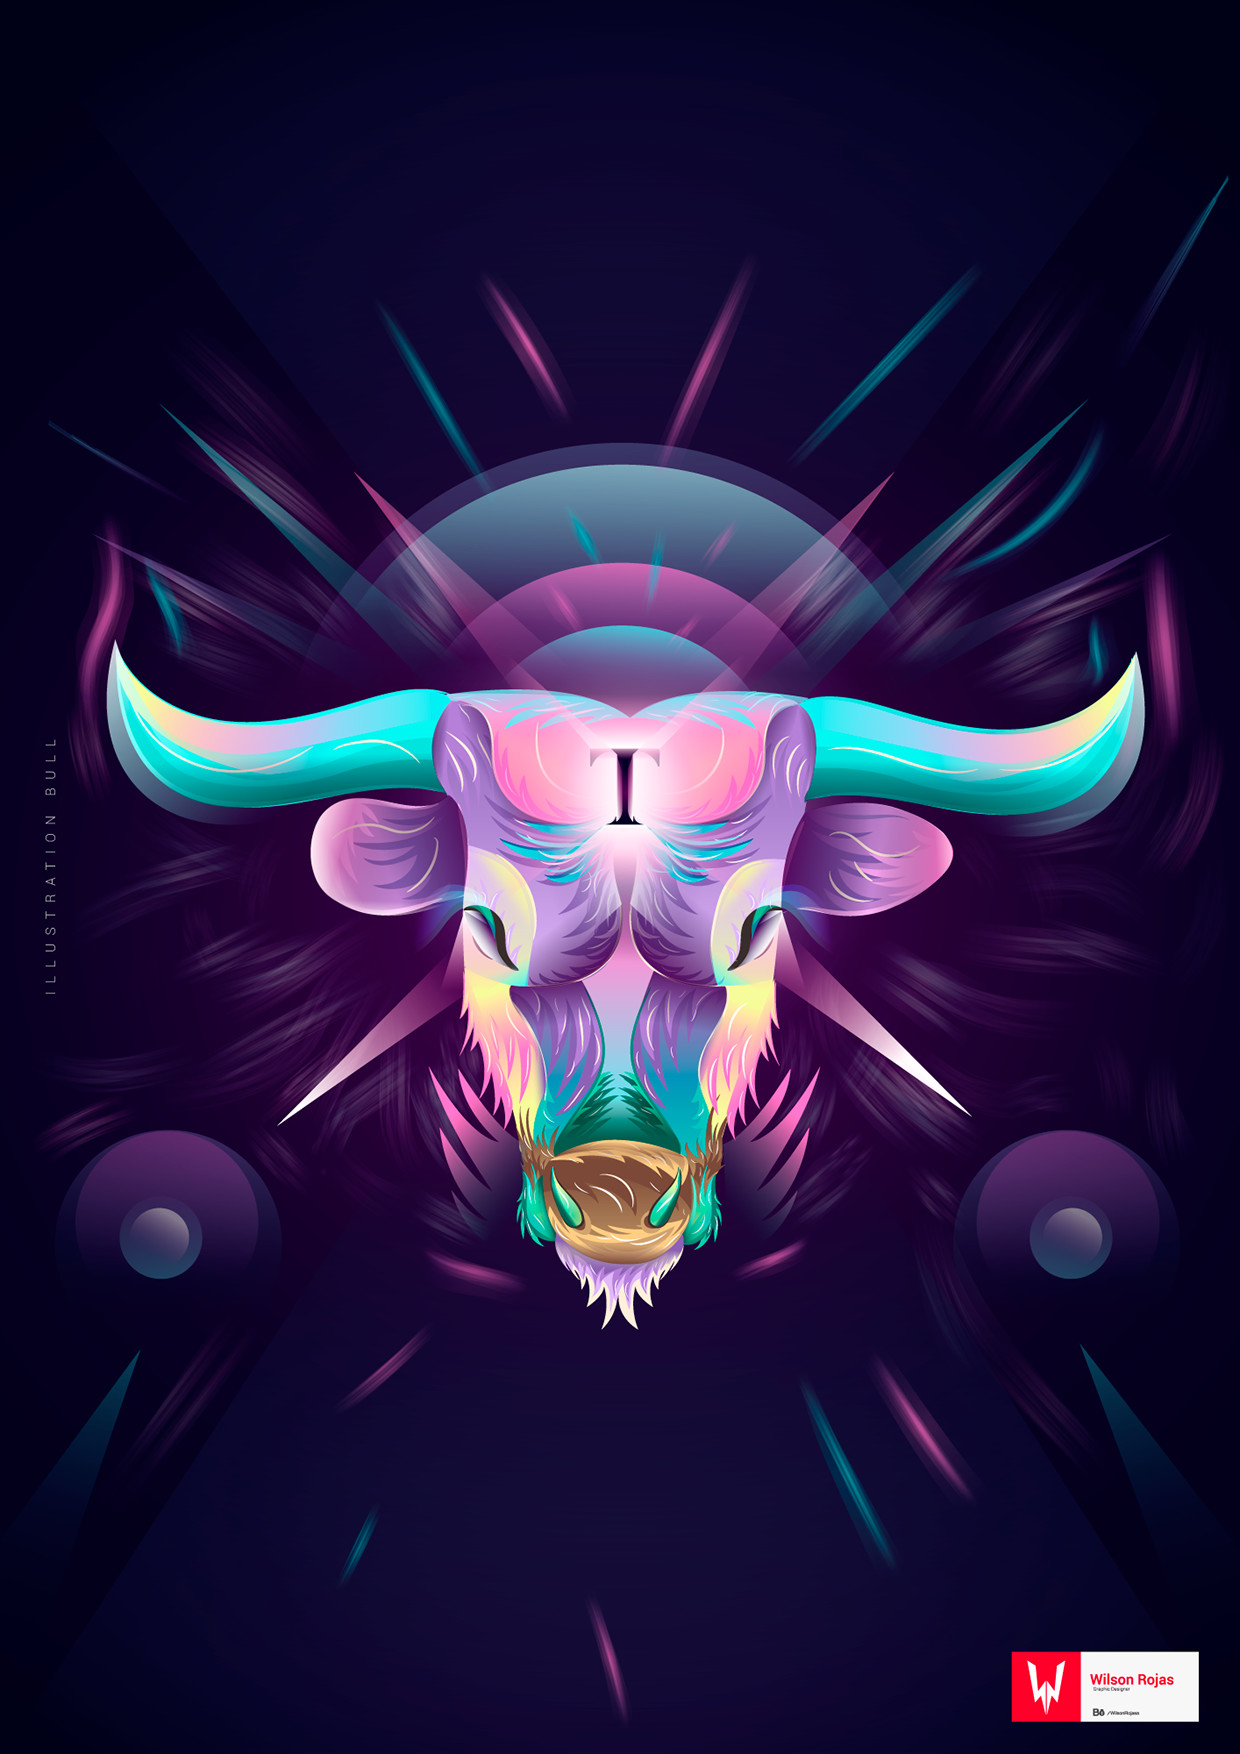 ArtStation - Bull - Illustrator CC